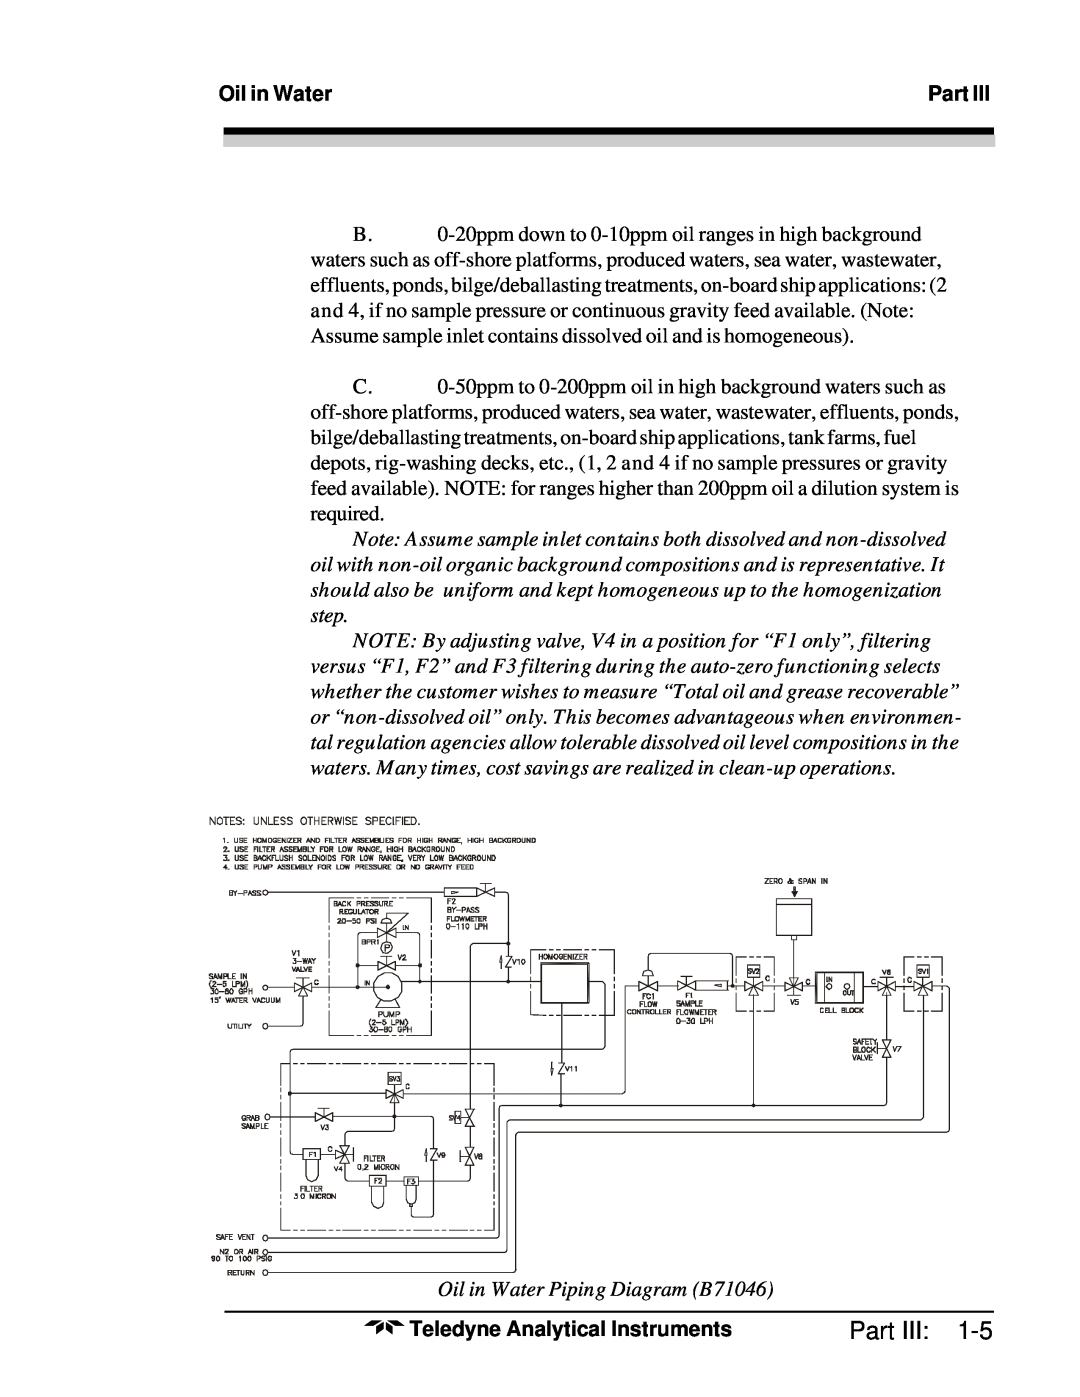 Teledyne 6600 manual Part III, Oil in Water Piping Diagram B71046, Teledyne Analytical Instruments 